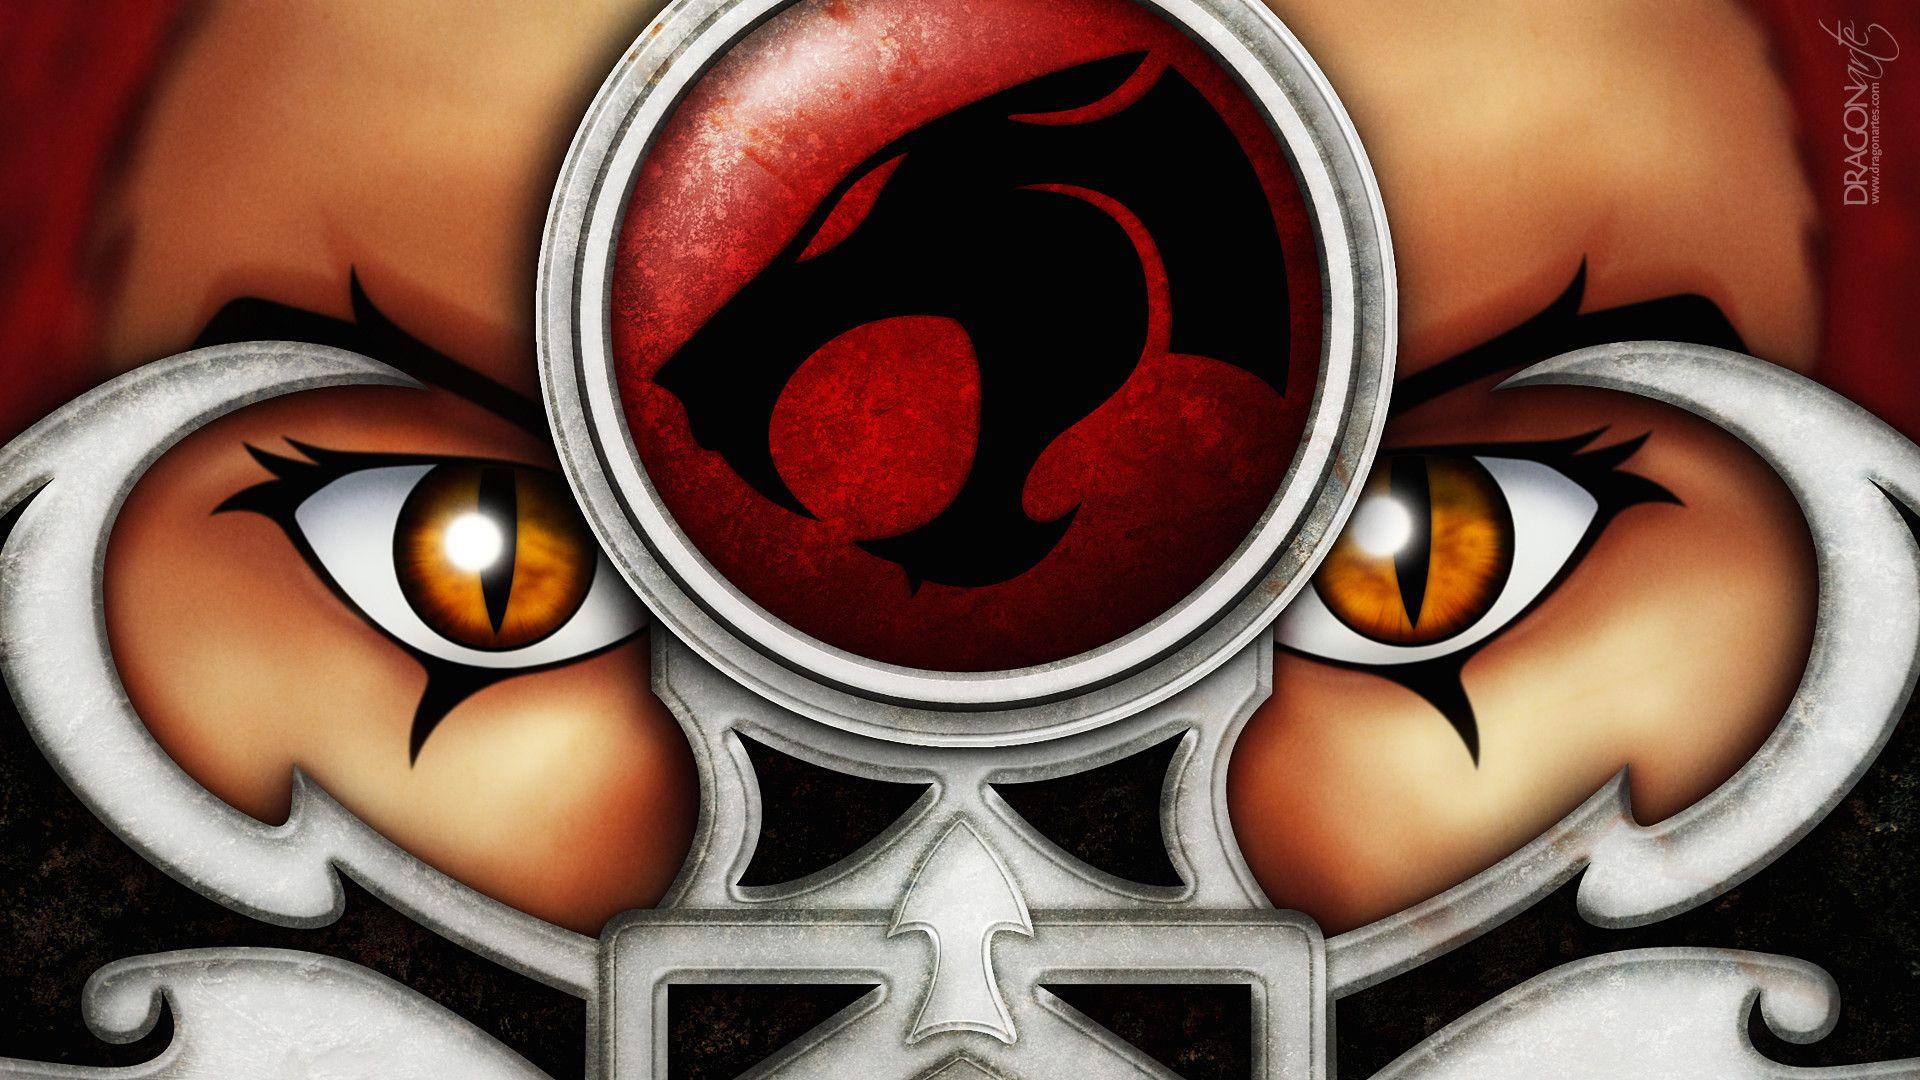 Thundercats Logo Wallpaper